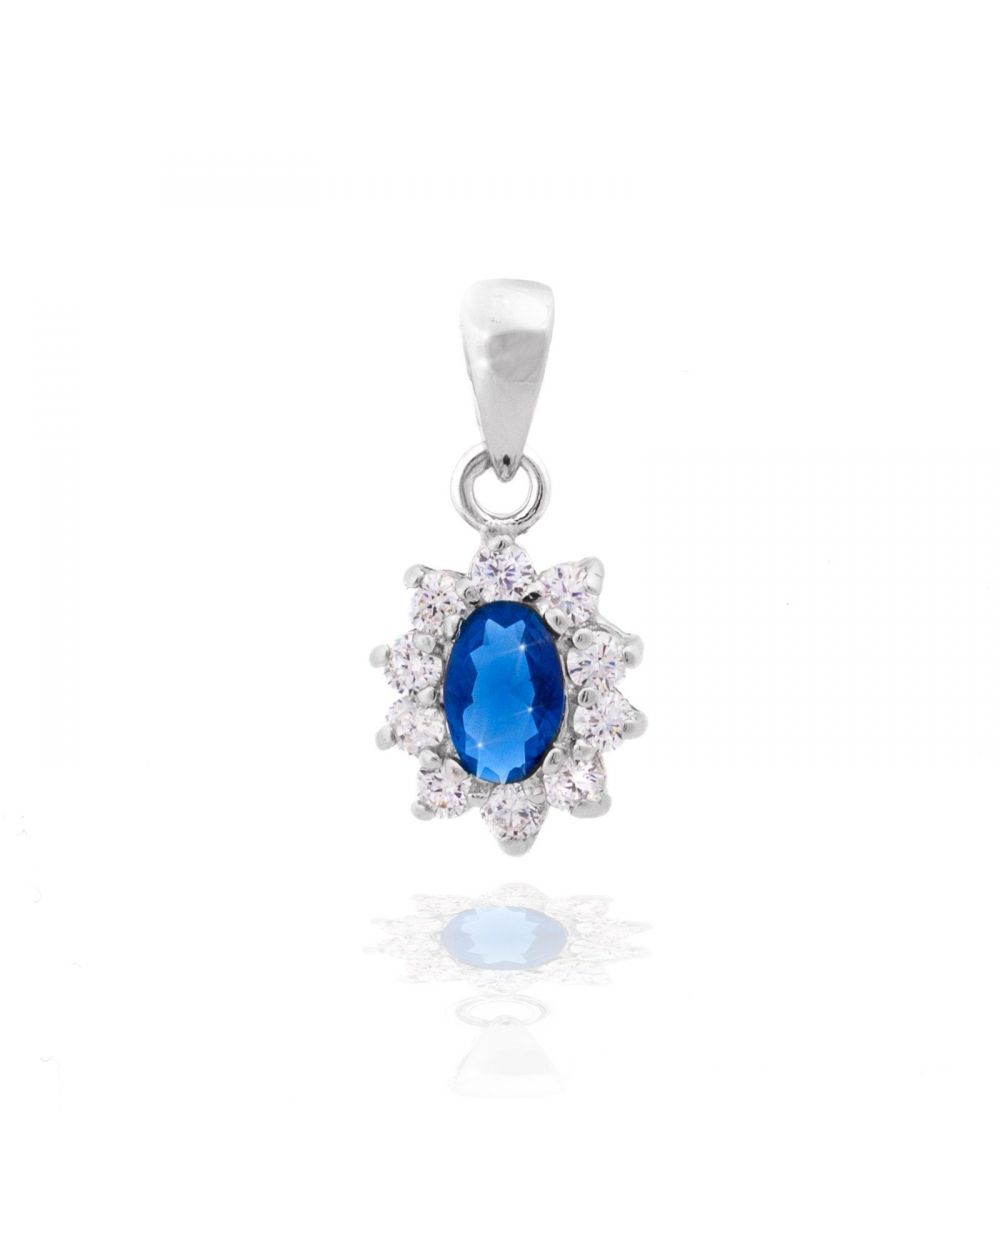 Pendentif Diana bleu saphir - Bijoux en argent - Pendentif argent 925